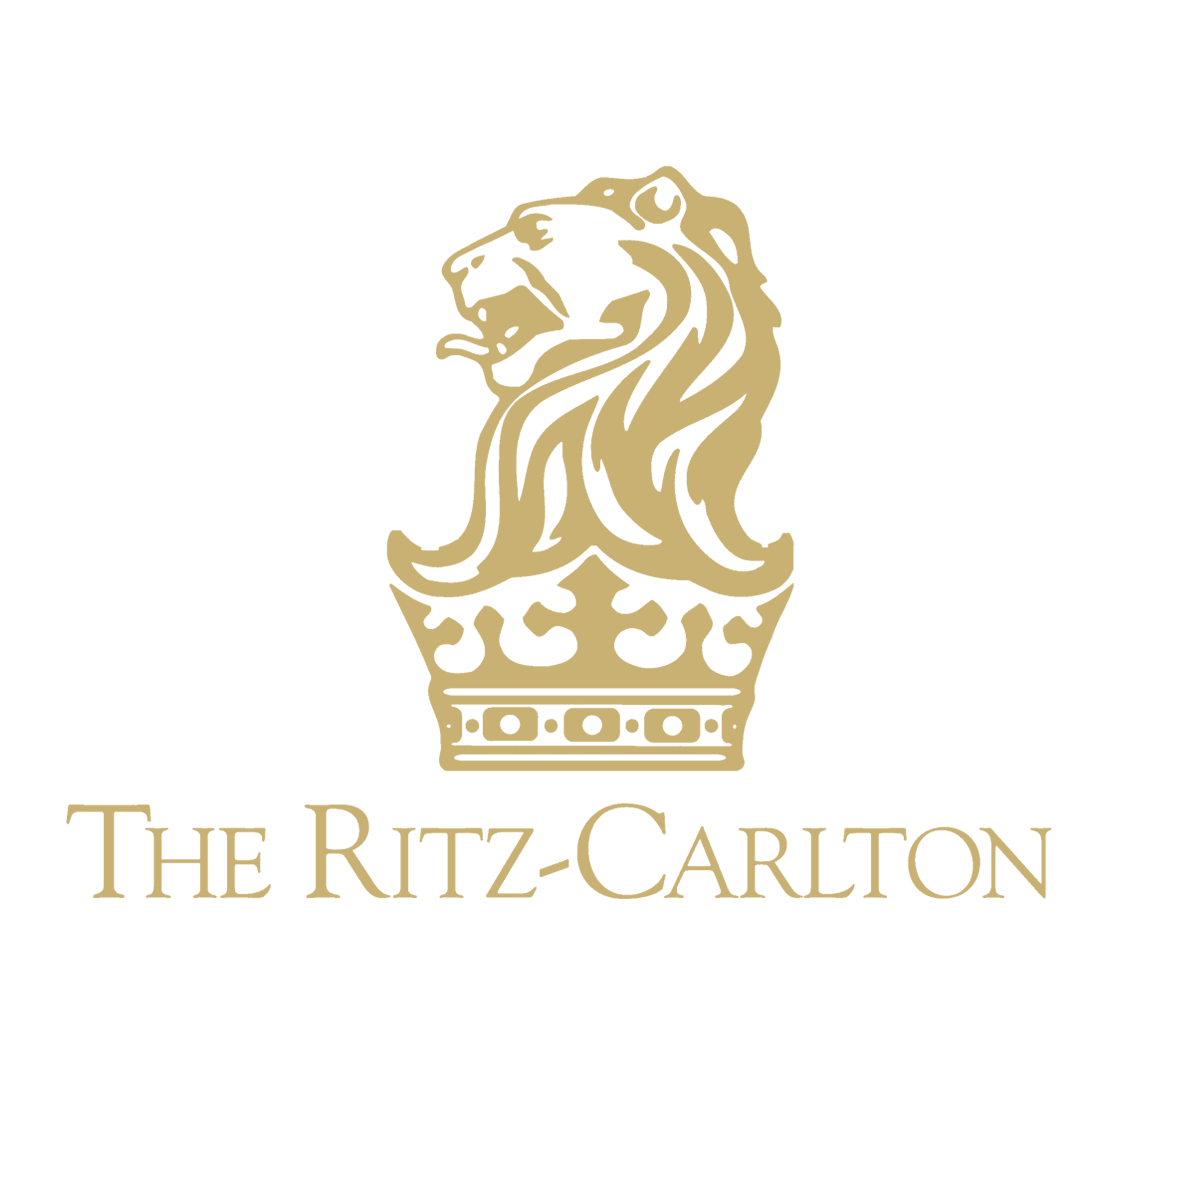 Ritz Carlton logo HoCoSo Track record